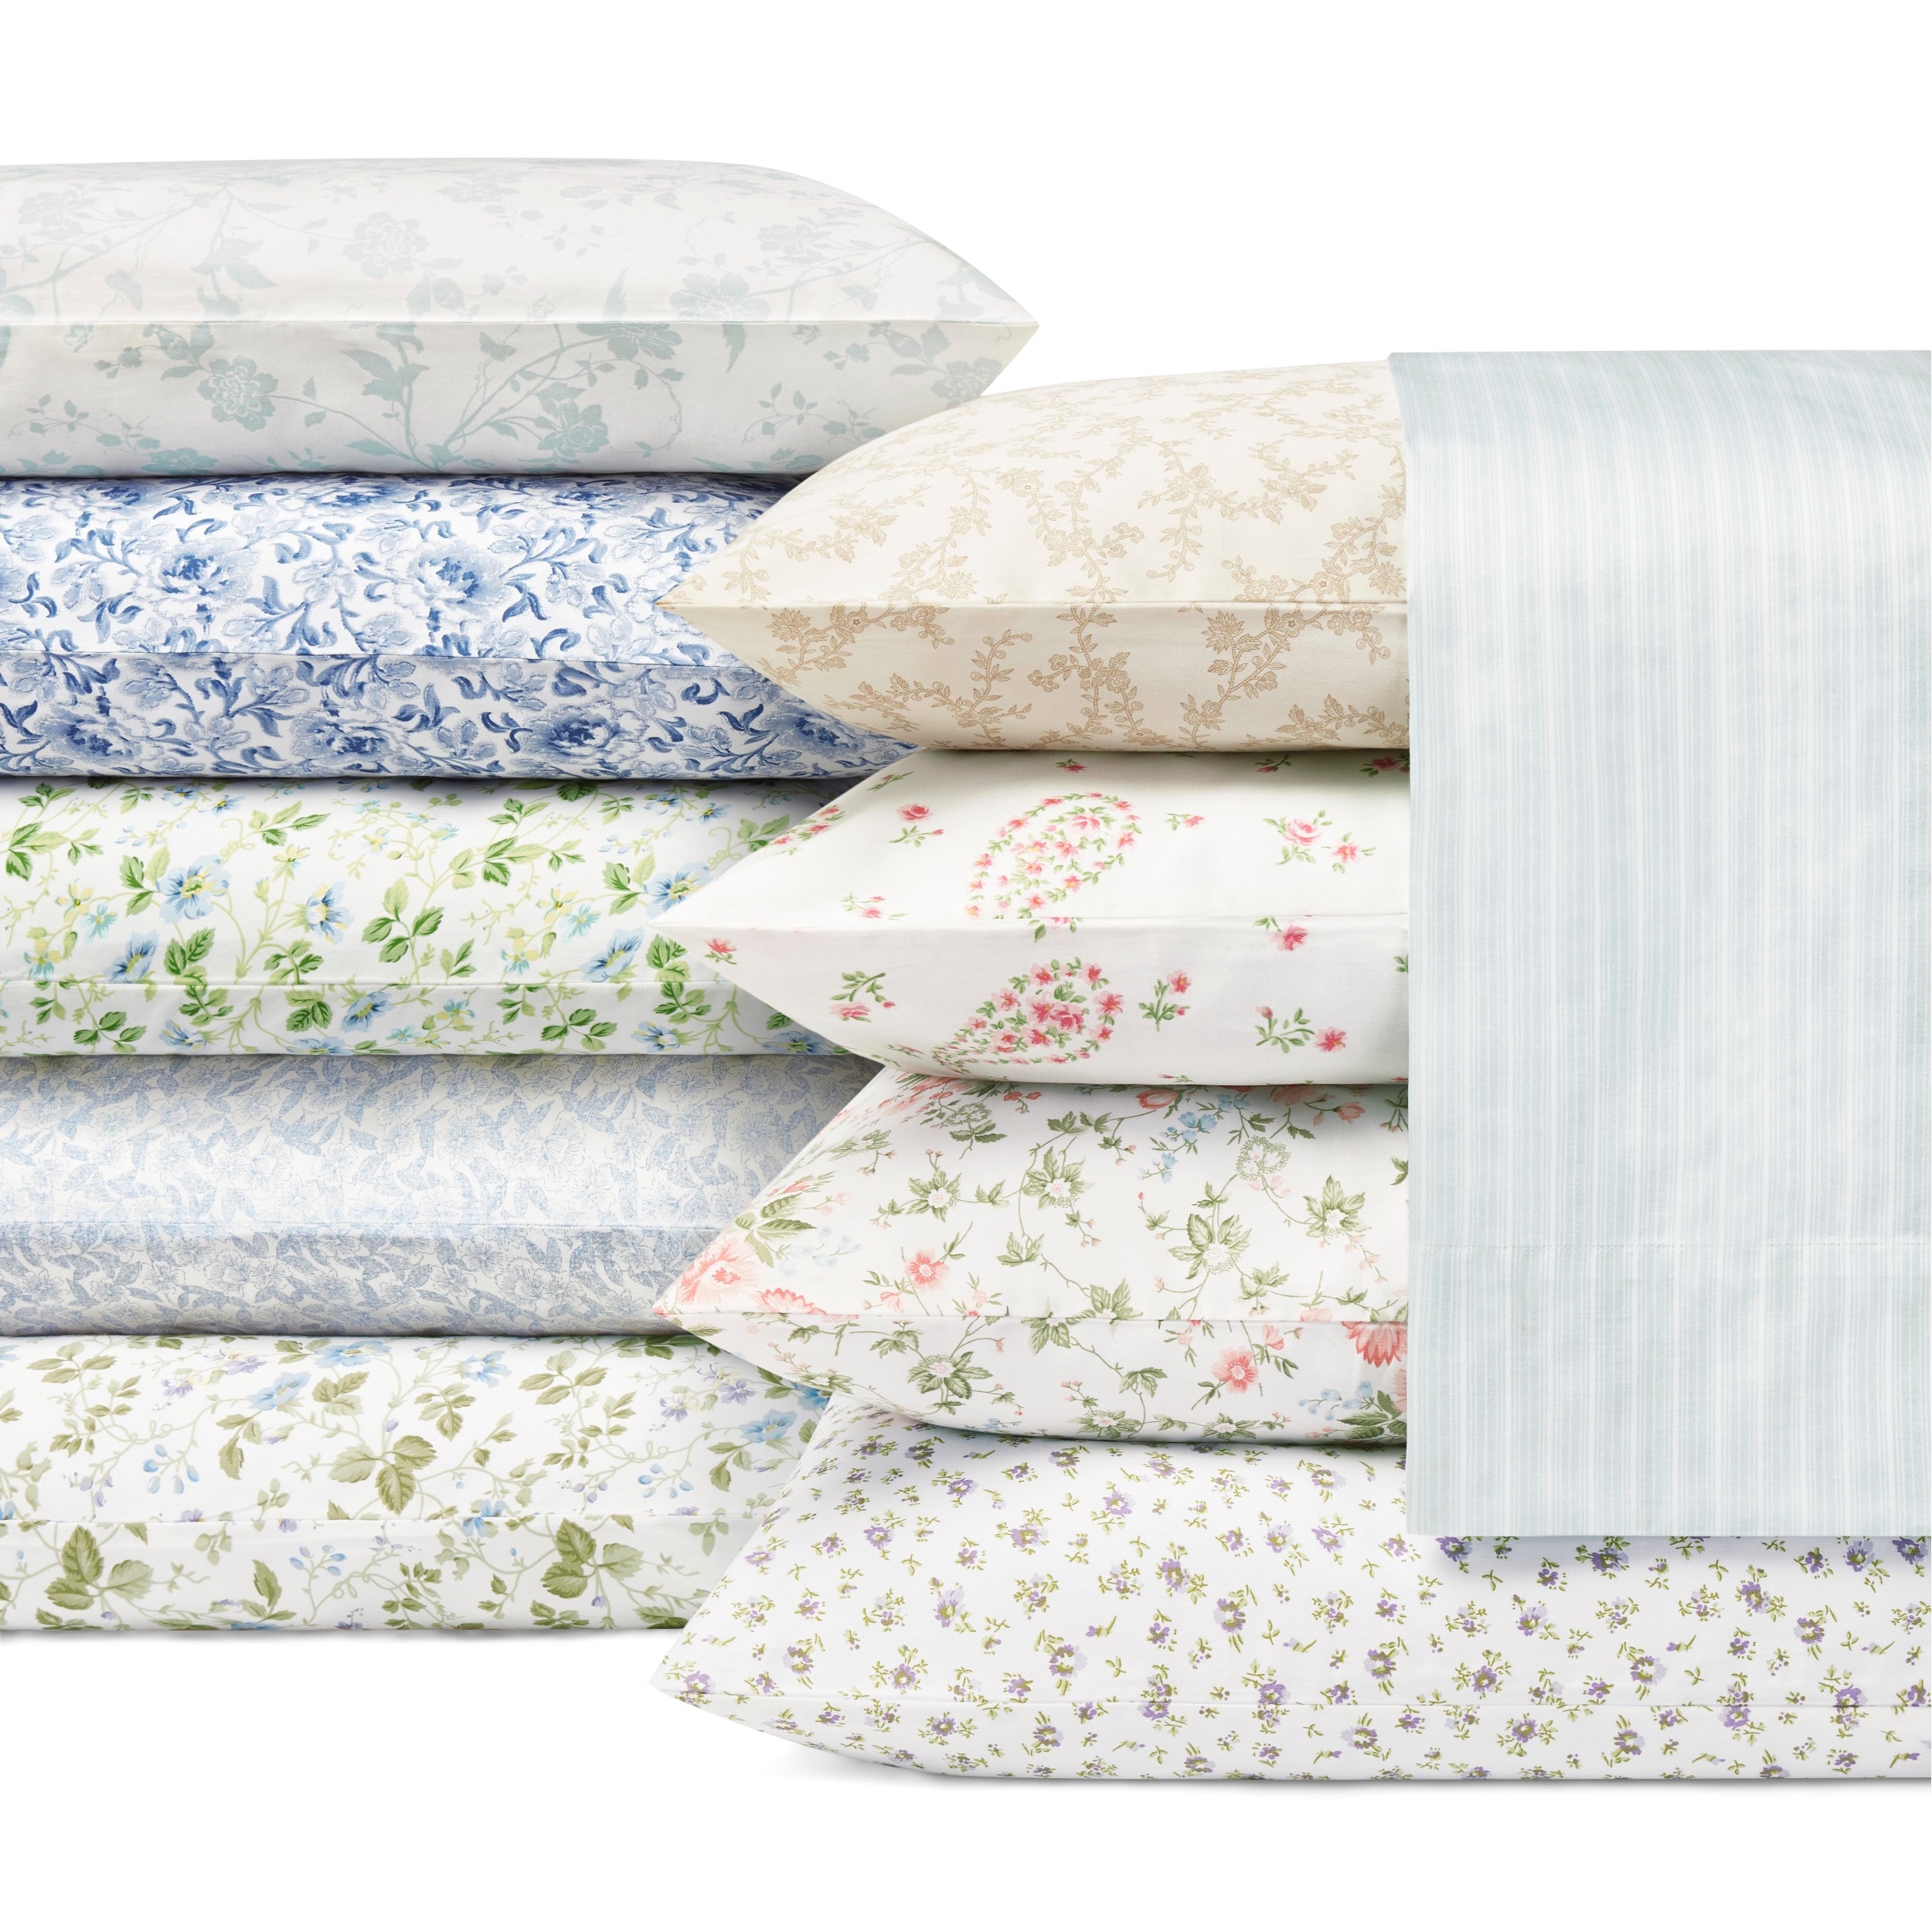 Laura Ashley Soft & Silky 300 Thread Count Sateen Cotton Sheet Set